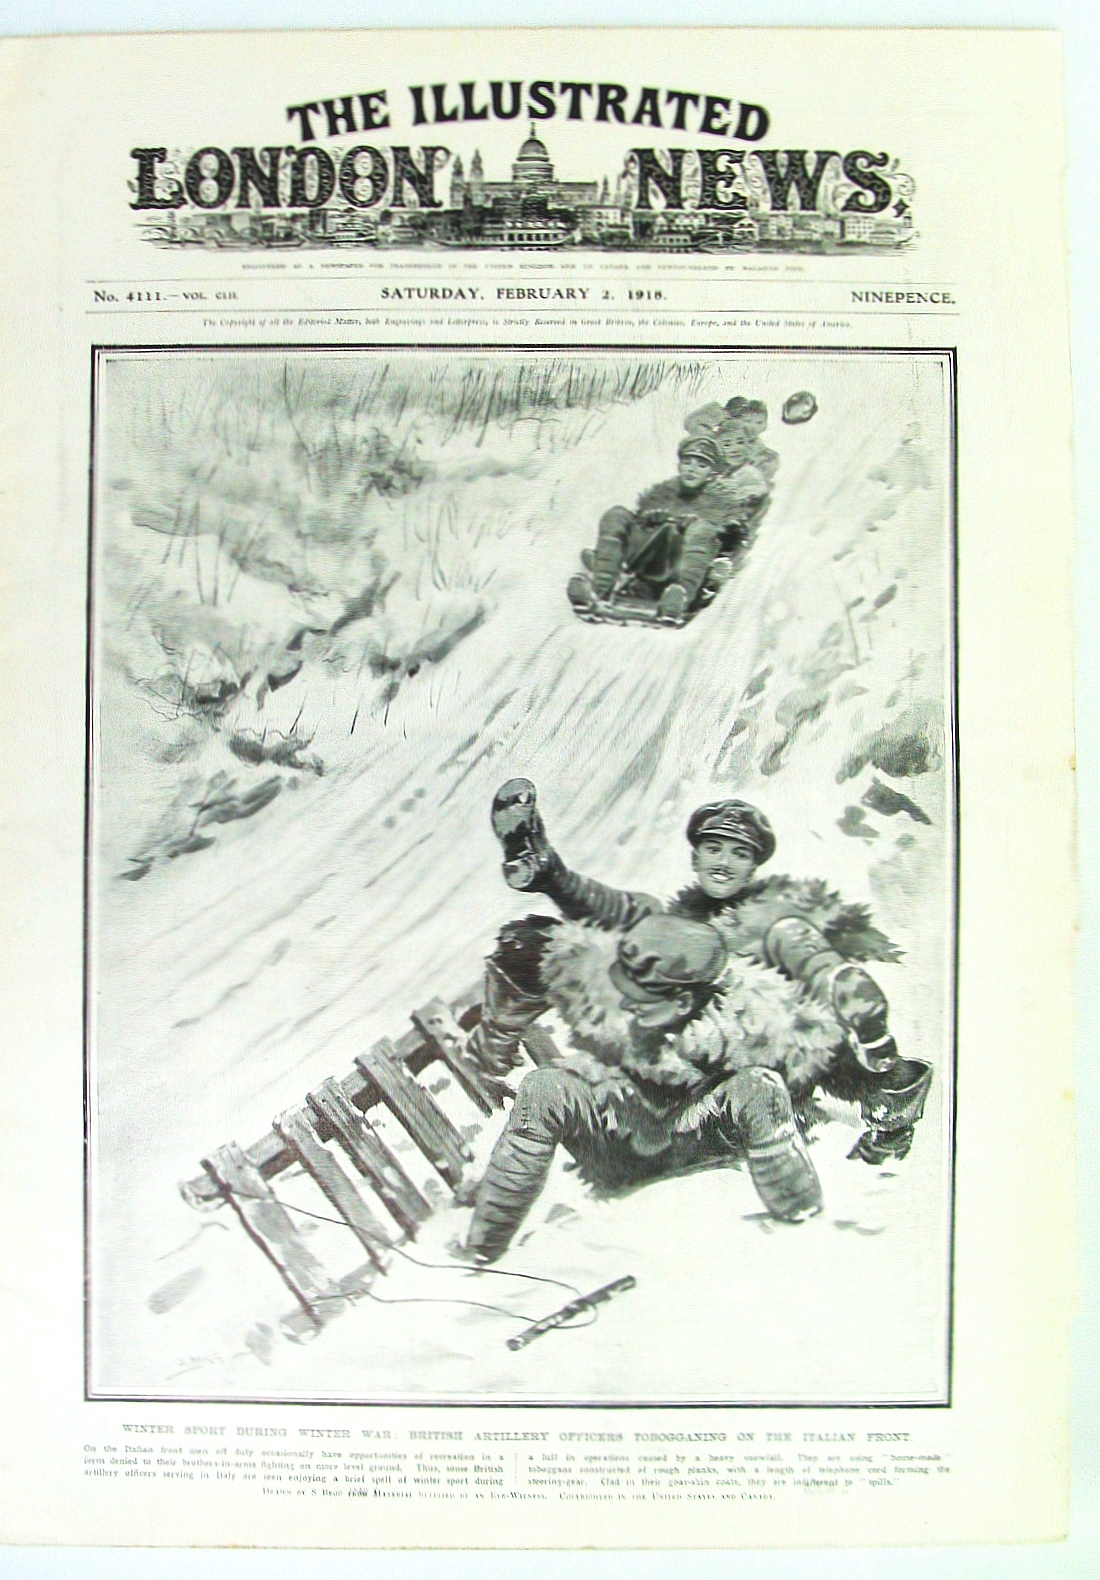 CHESTERTON, G.K. - The Illustrated London News, Saturday February 2, 1918 - Petrograd Under Bolshevists / British Army in Mesopotamia